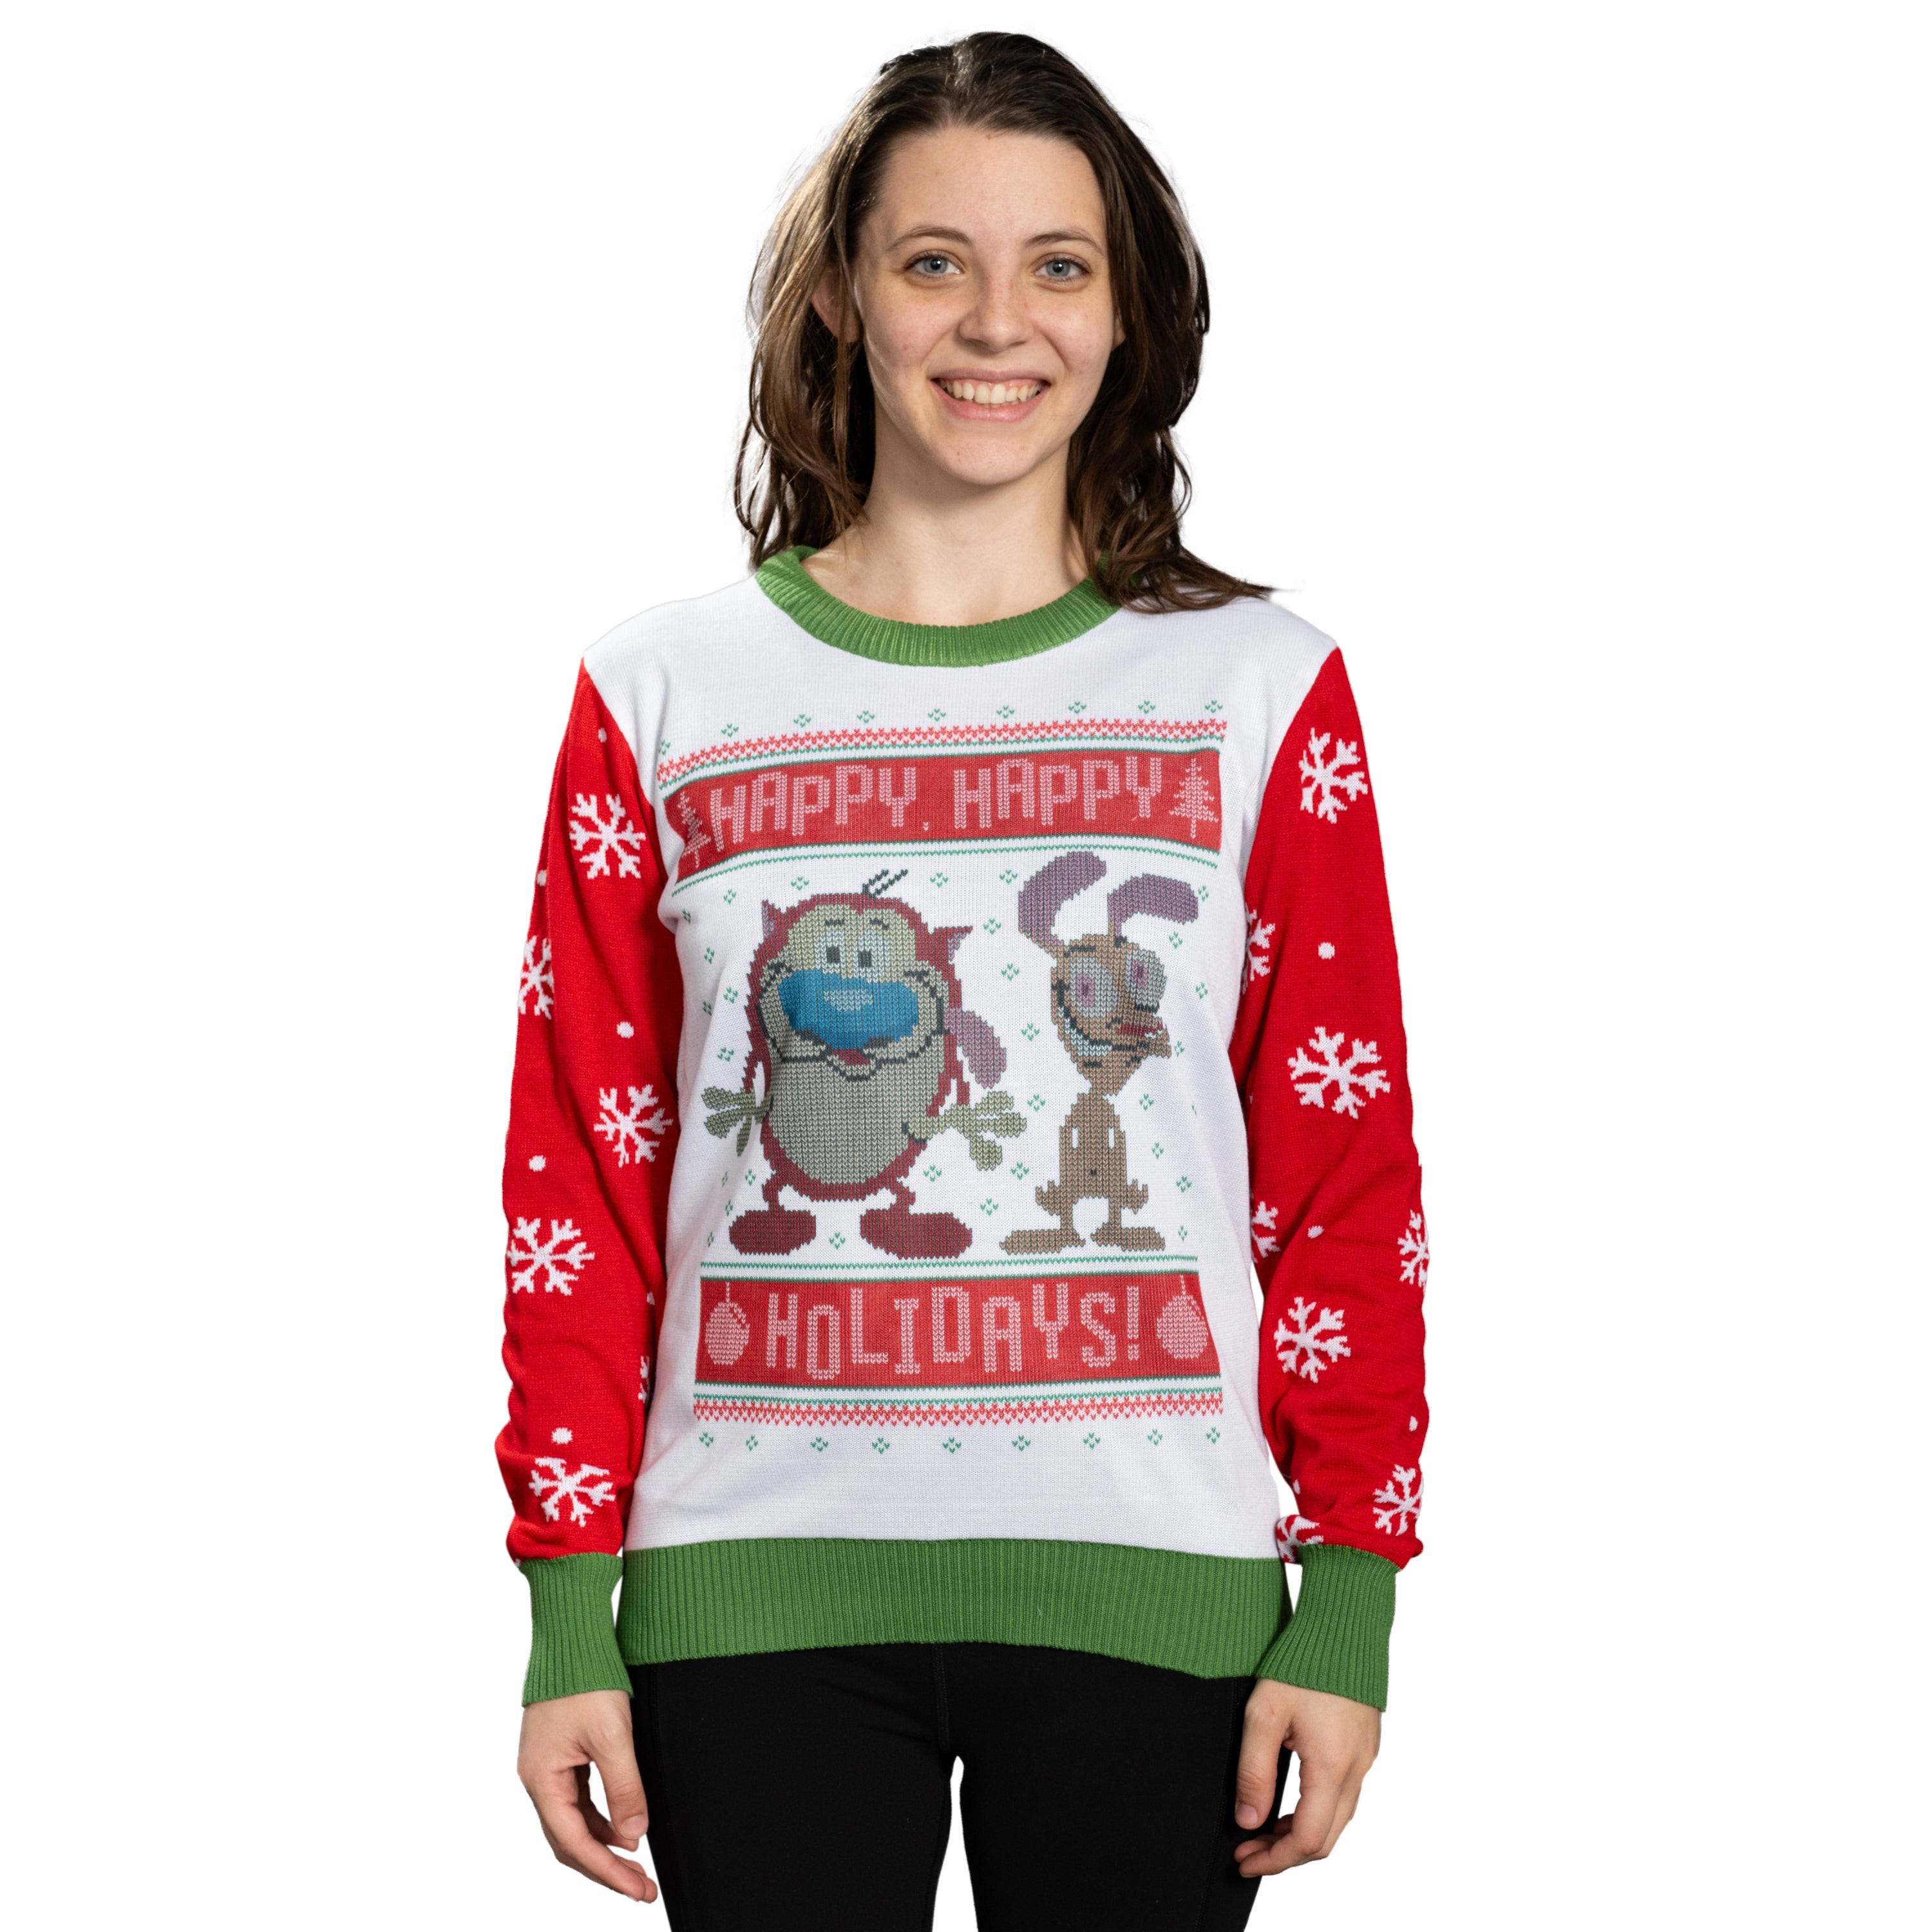 Happy Happy Holidays Ren & Stimpy Character Sweater